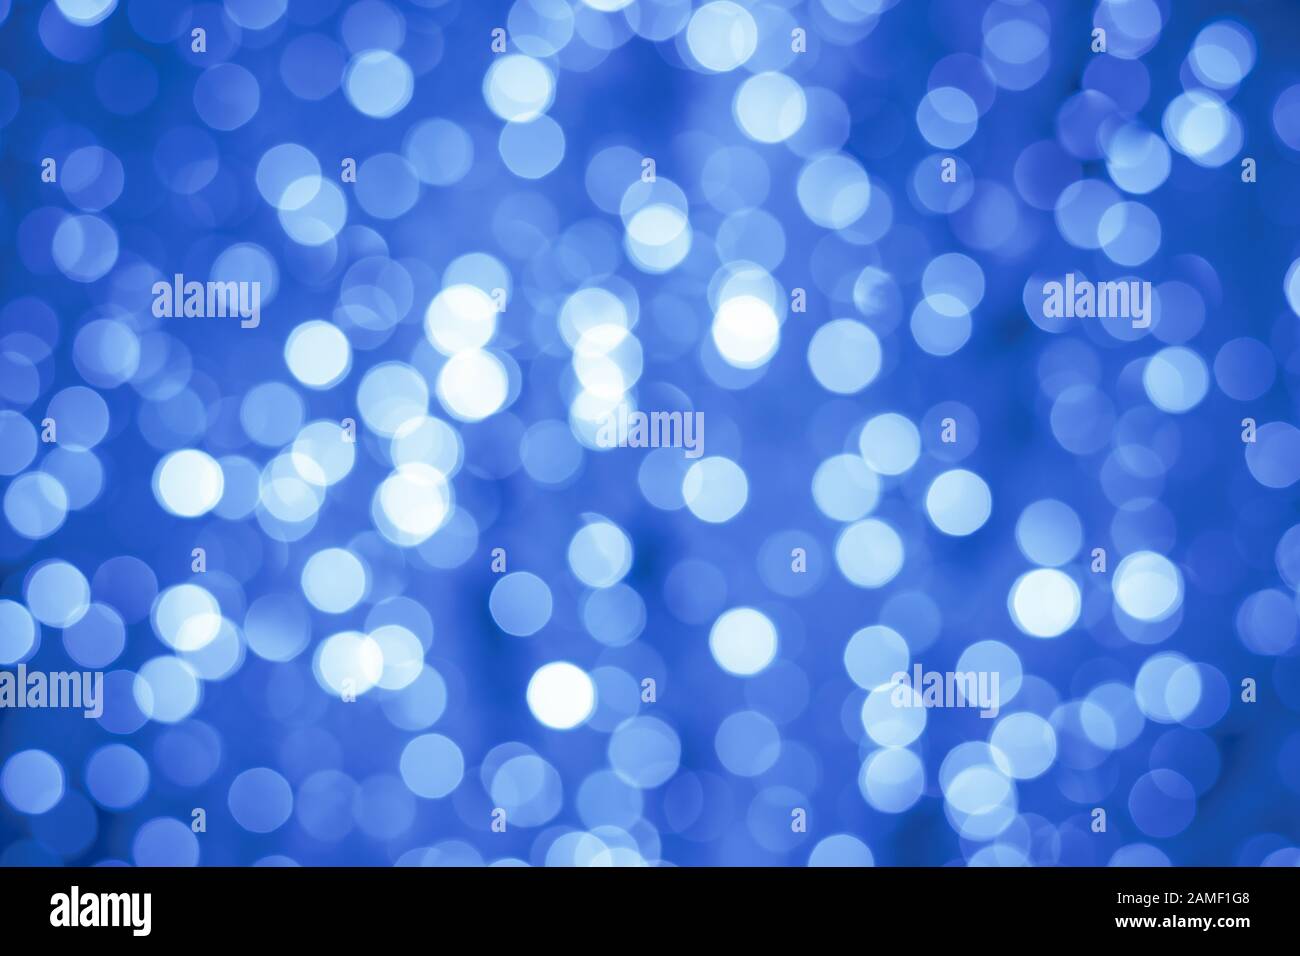 Blur abstract background, blurred blue backdrop. Bokeh backgrounds. Art style. Christmas lights pattern. Glow illumination Stock Photo